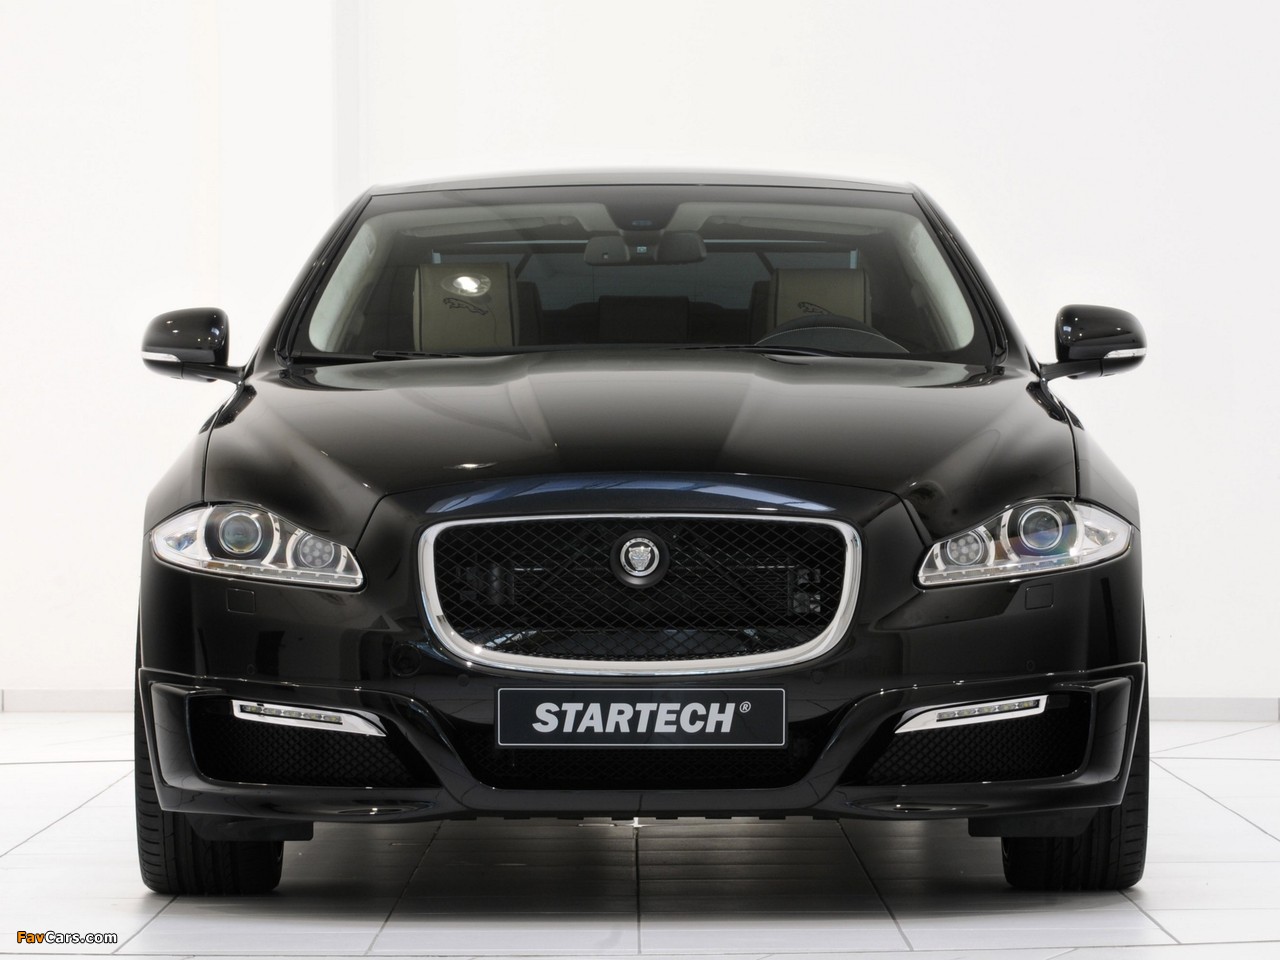 Startech Jaguar XJ (X351) 2011 photos (1280 x 960)